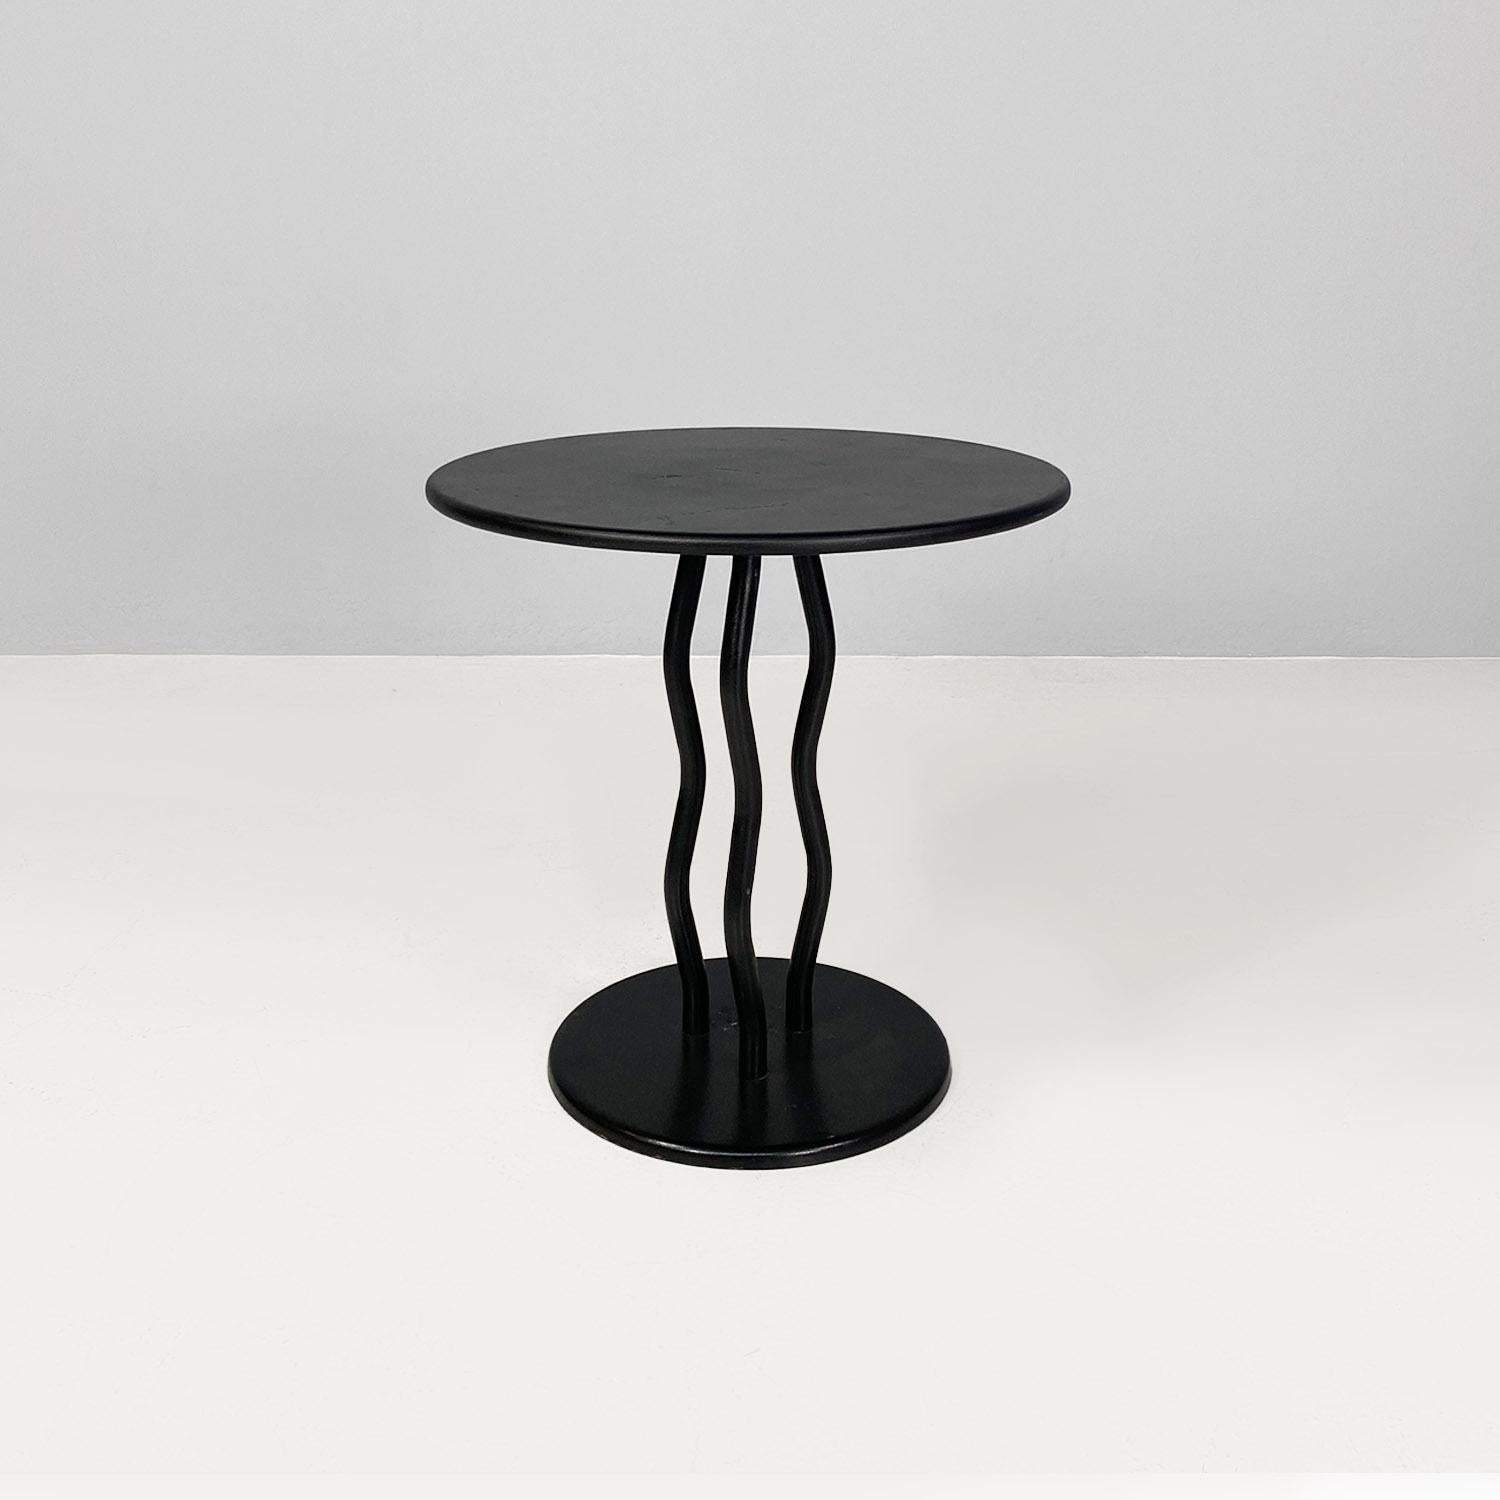 Modern Italian modern black metal round coffee table with three vawy legs, 1980s